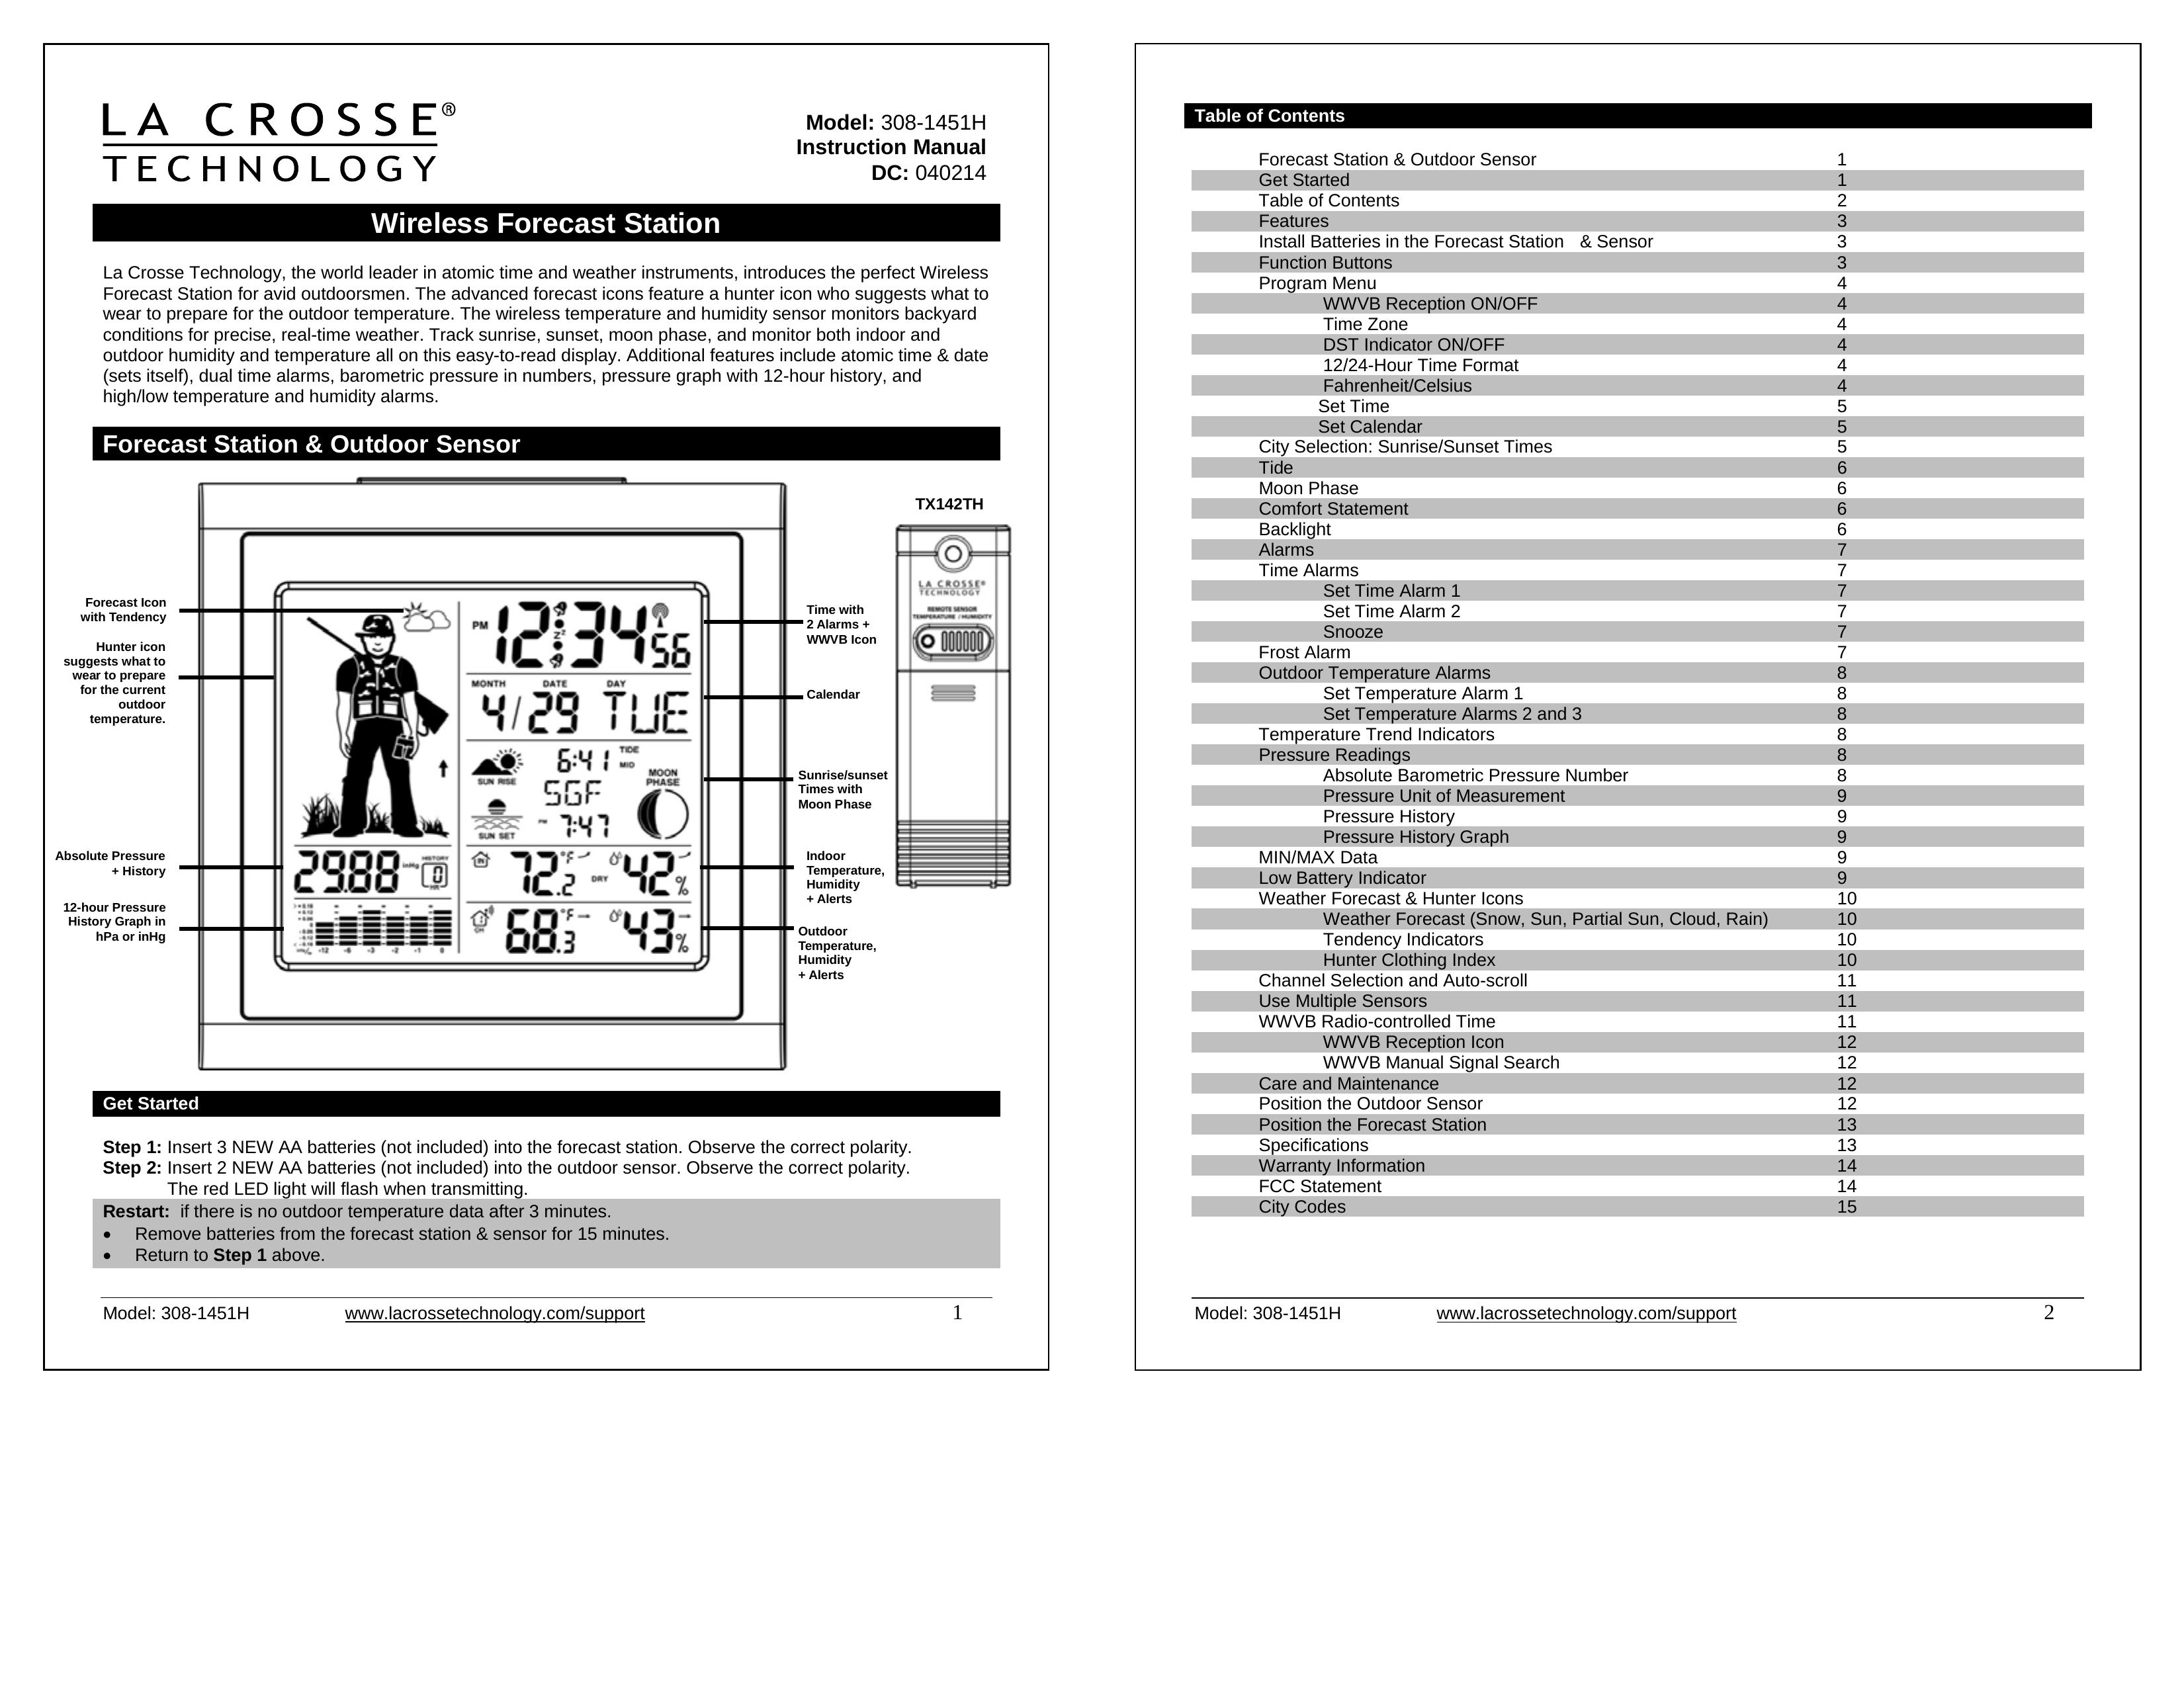 La Crosse Technology 308-1451H Weather Radio User Manual